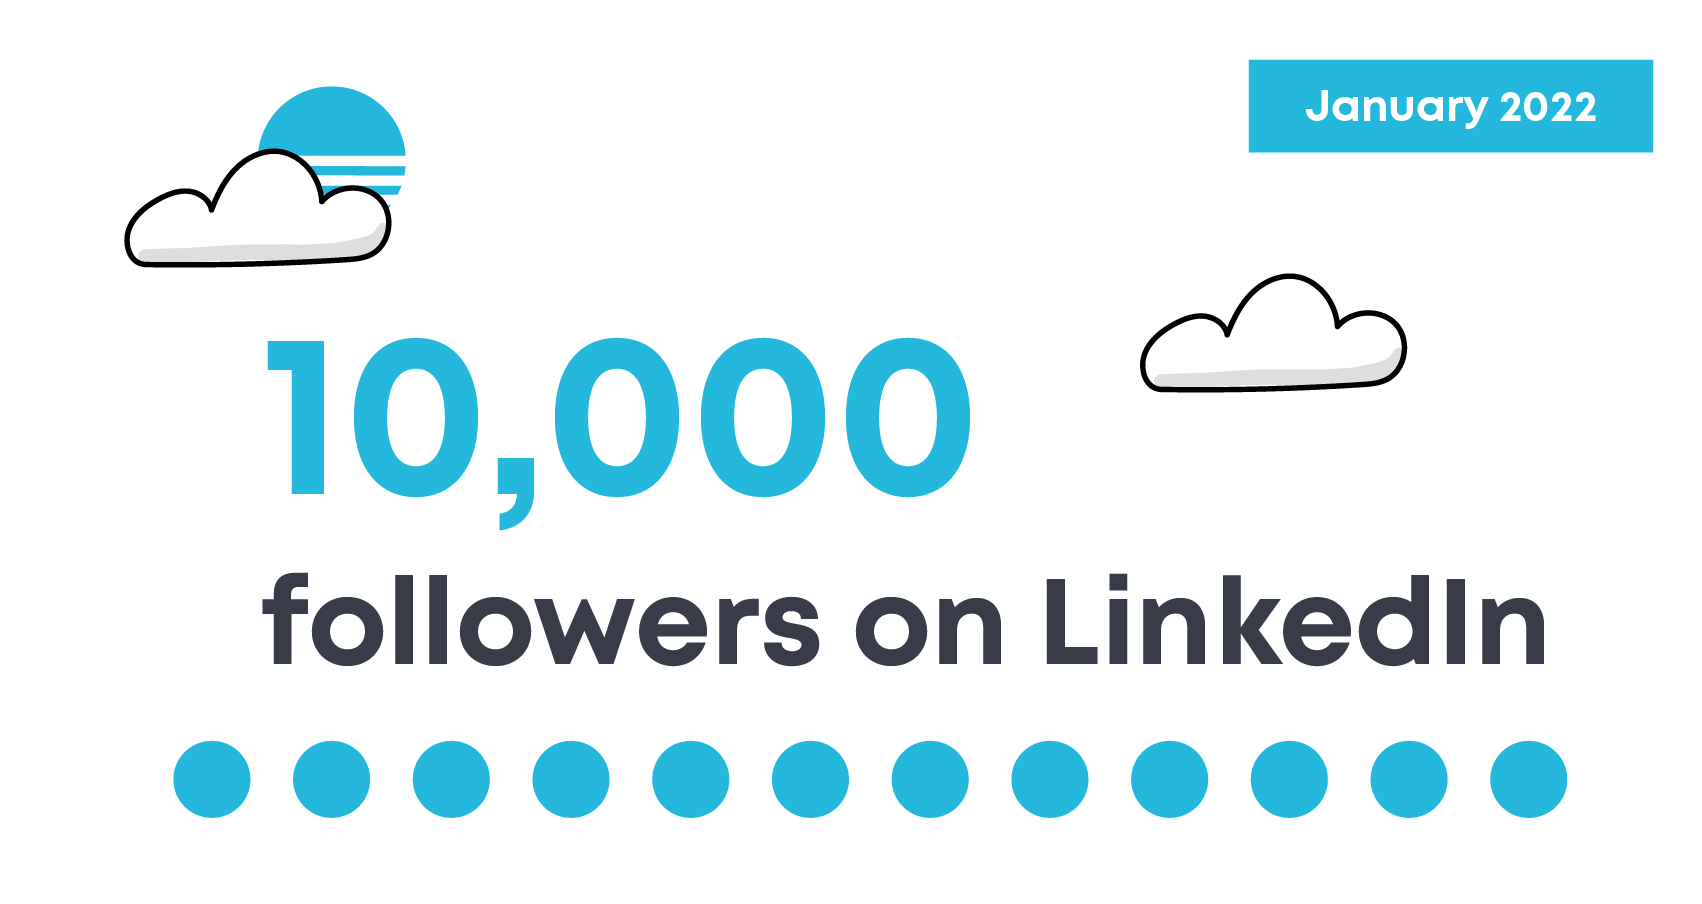 Intso hits 10,000 followers on LinkedIn